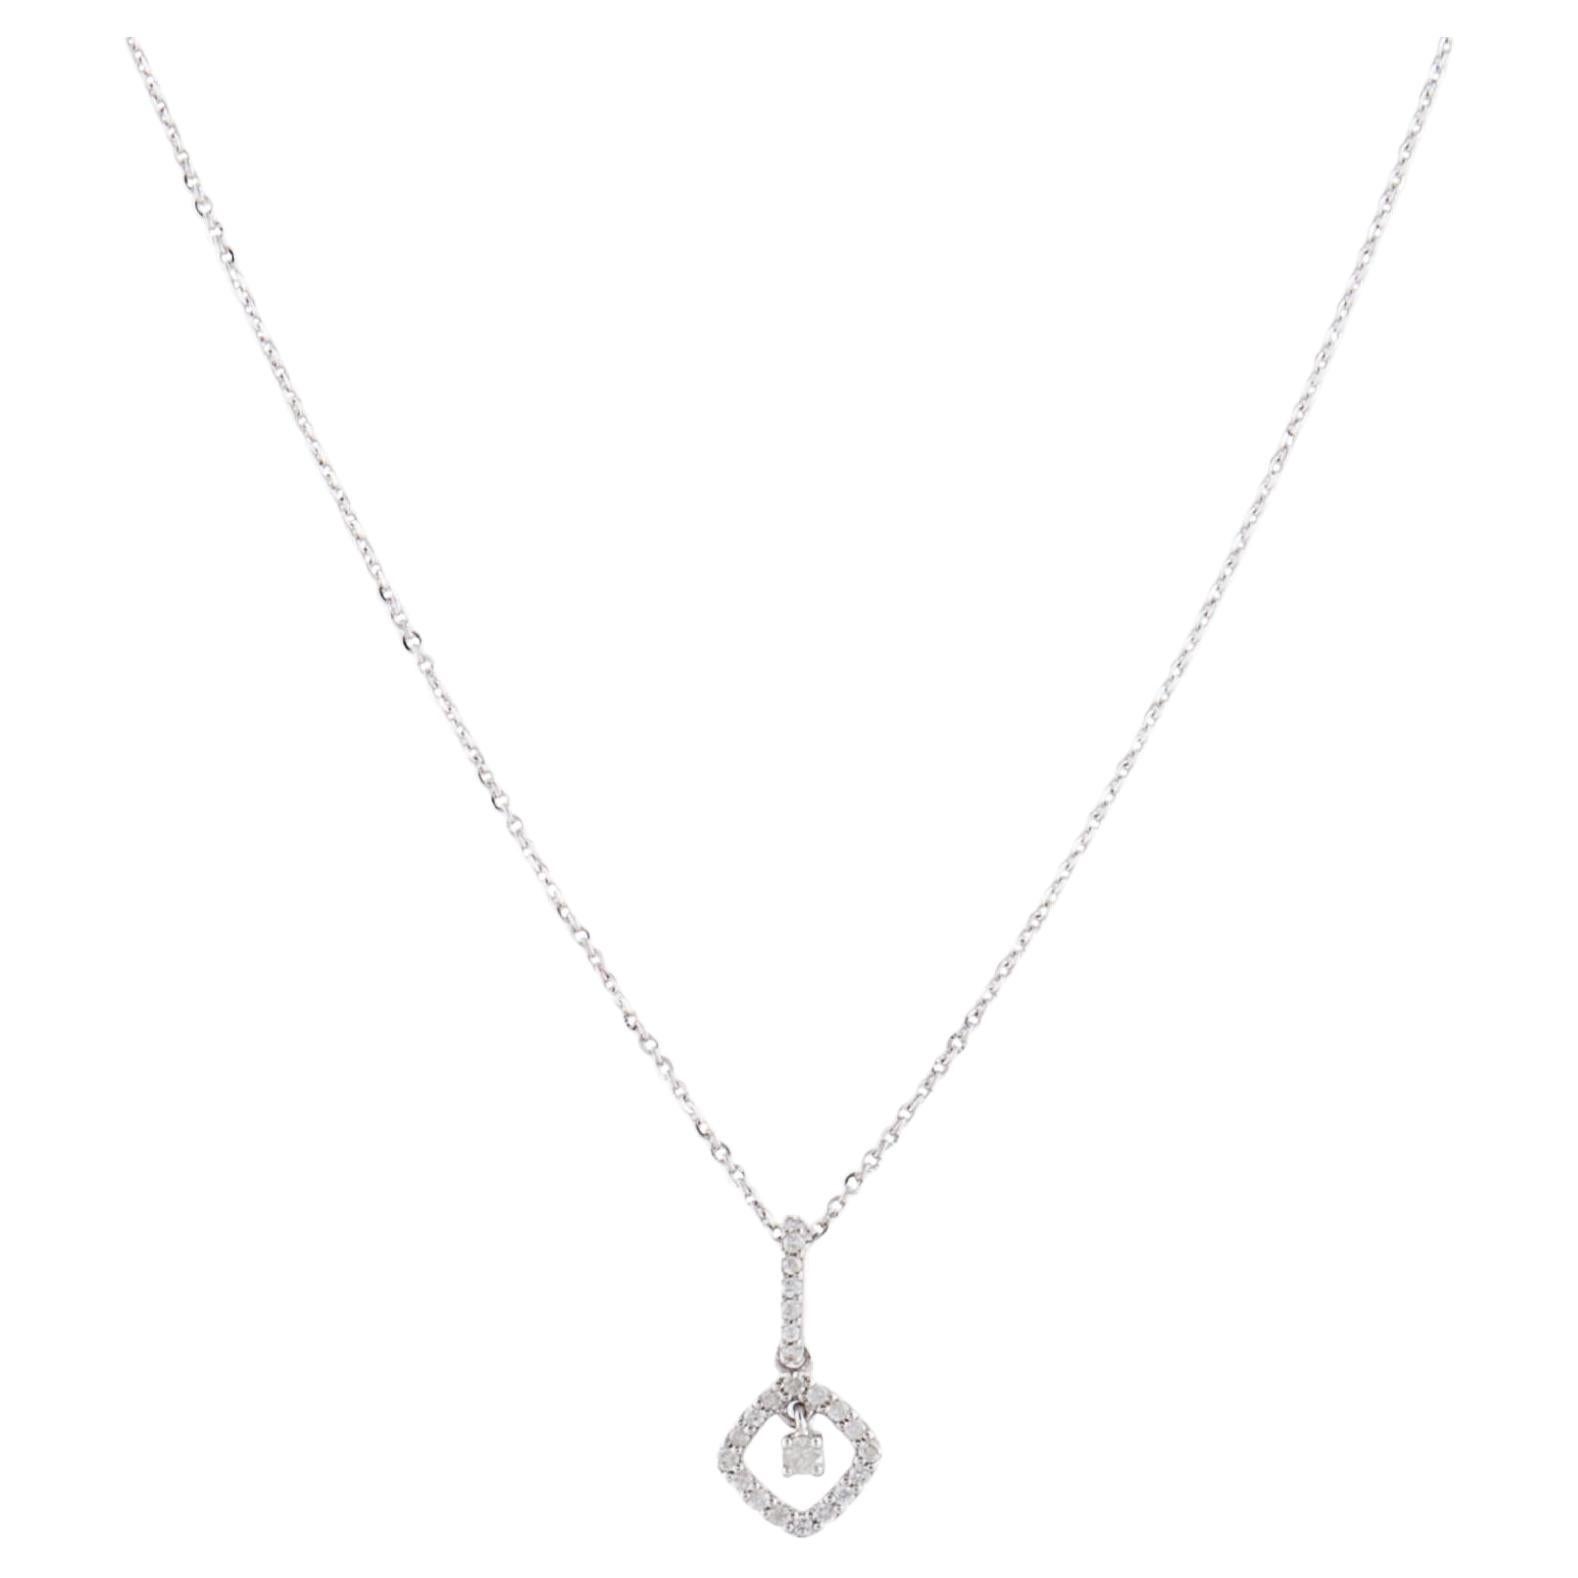 Luxury 14K Diamond Pendant Necklace - Elegant & Timeless Statement Piece